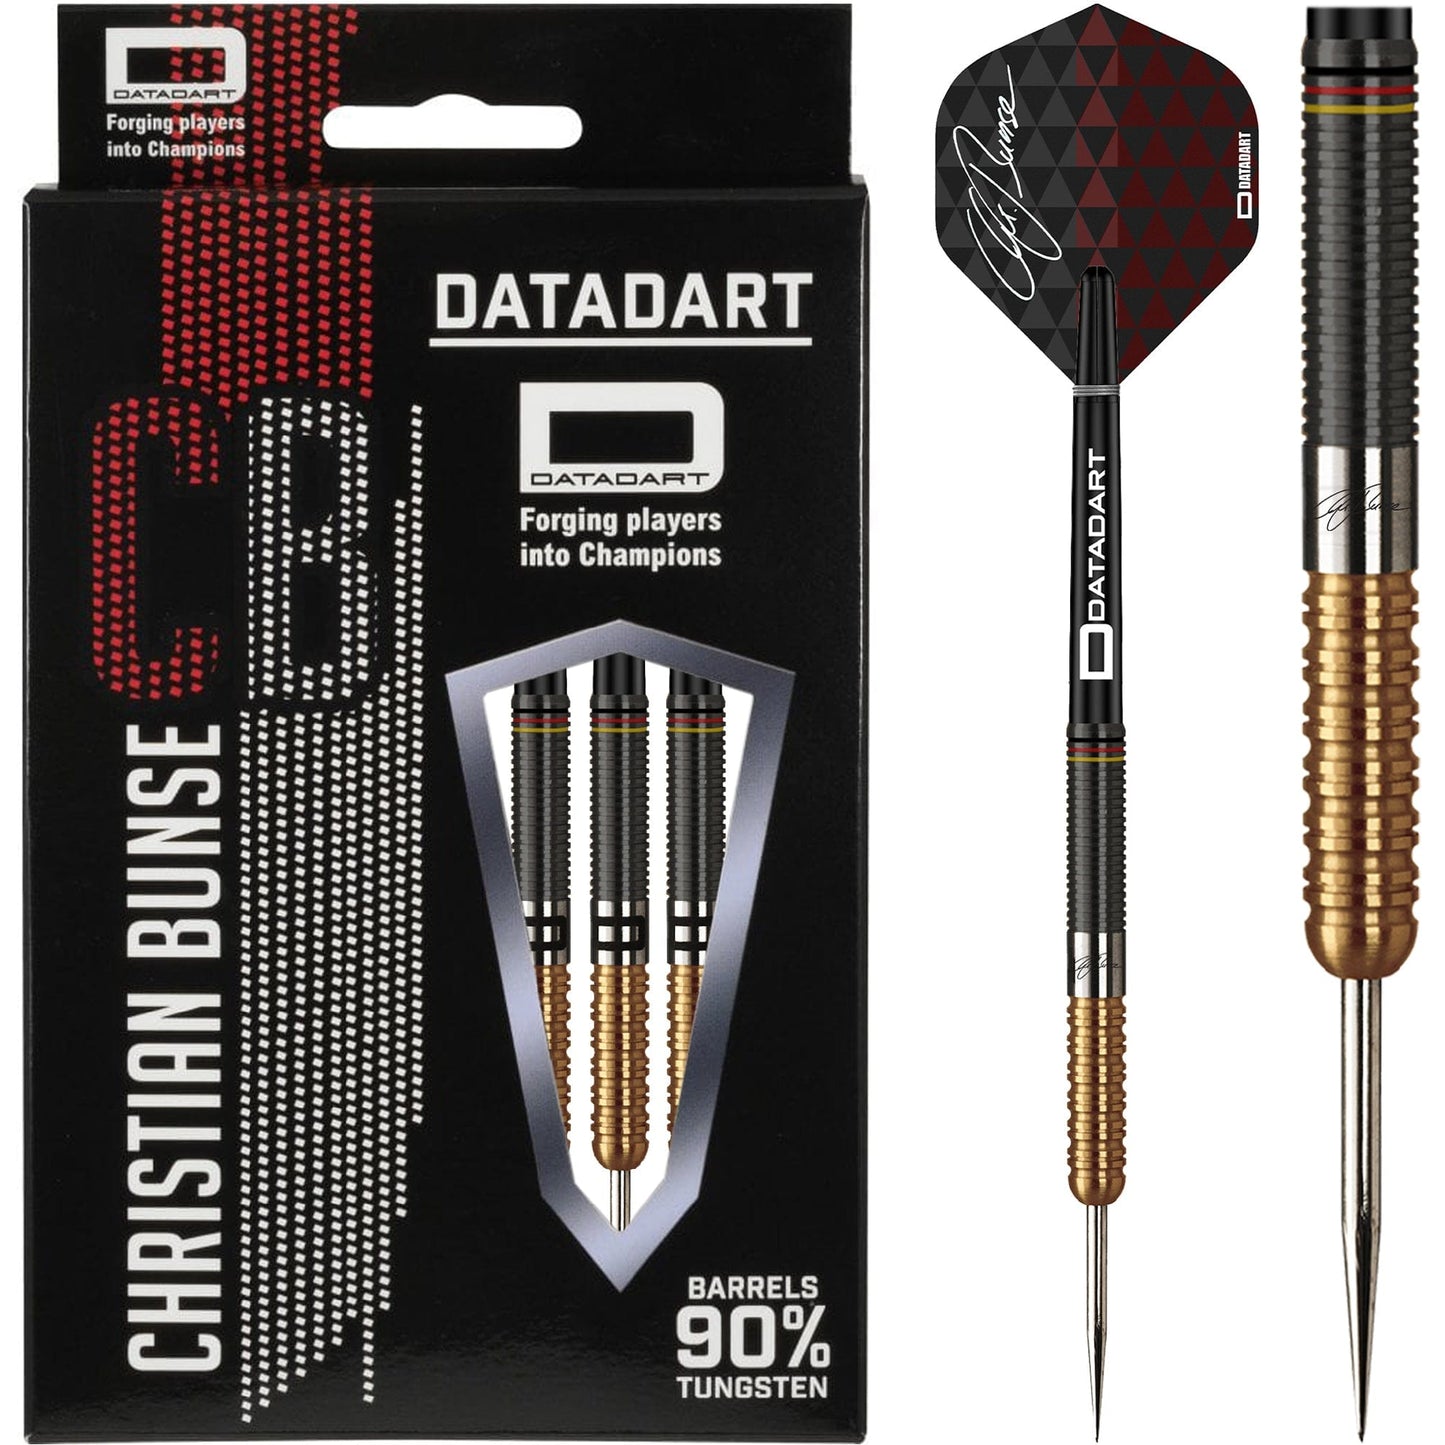 Datadart Christian Bunse Darts - Steel Tip - 90% - Black and Gold PVD 21g